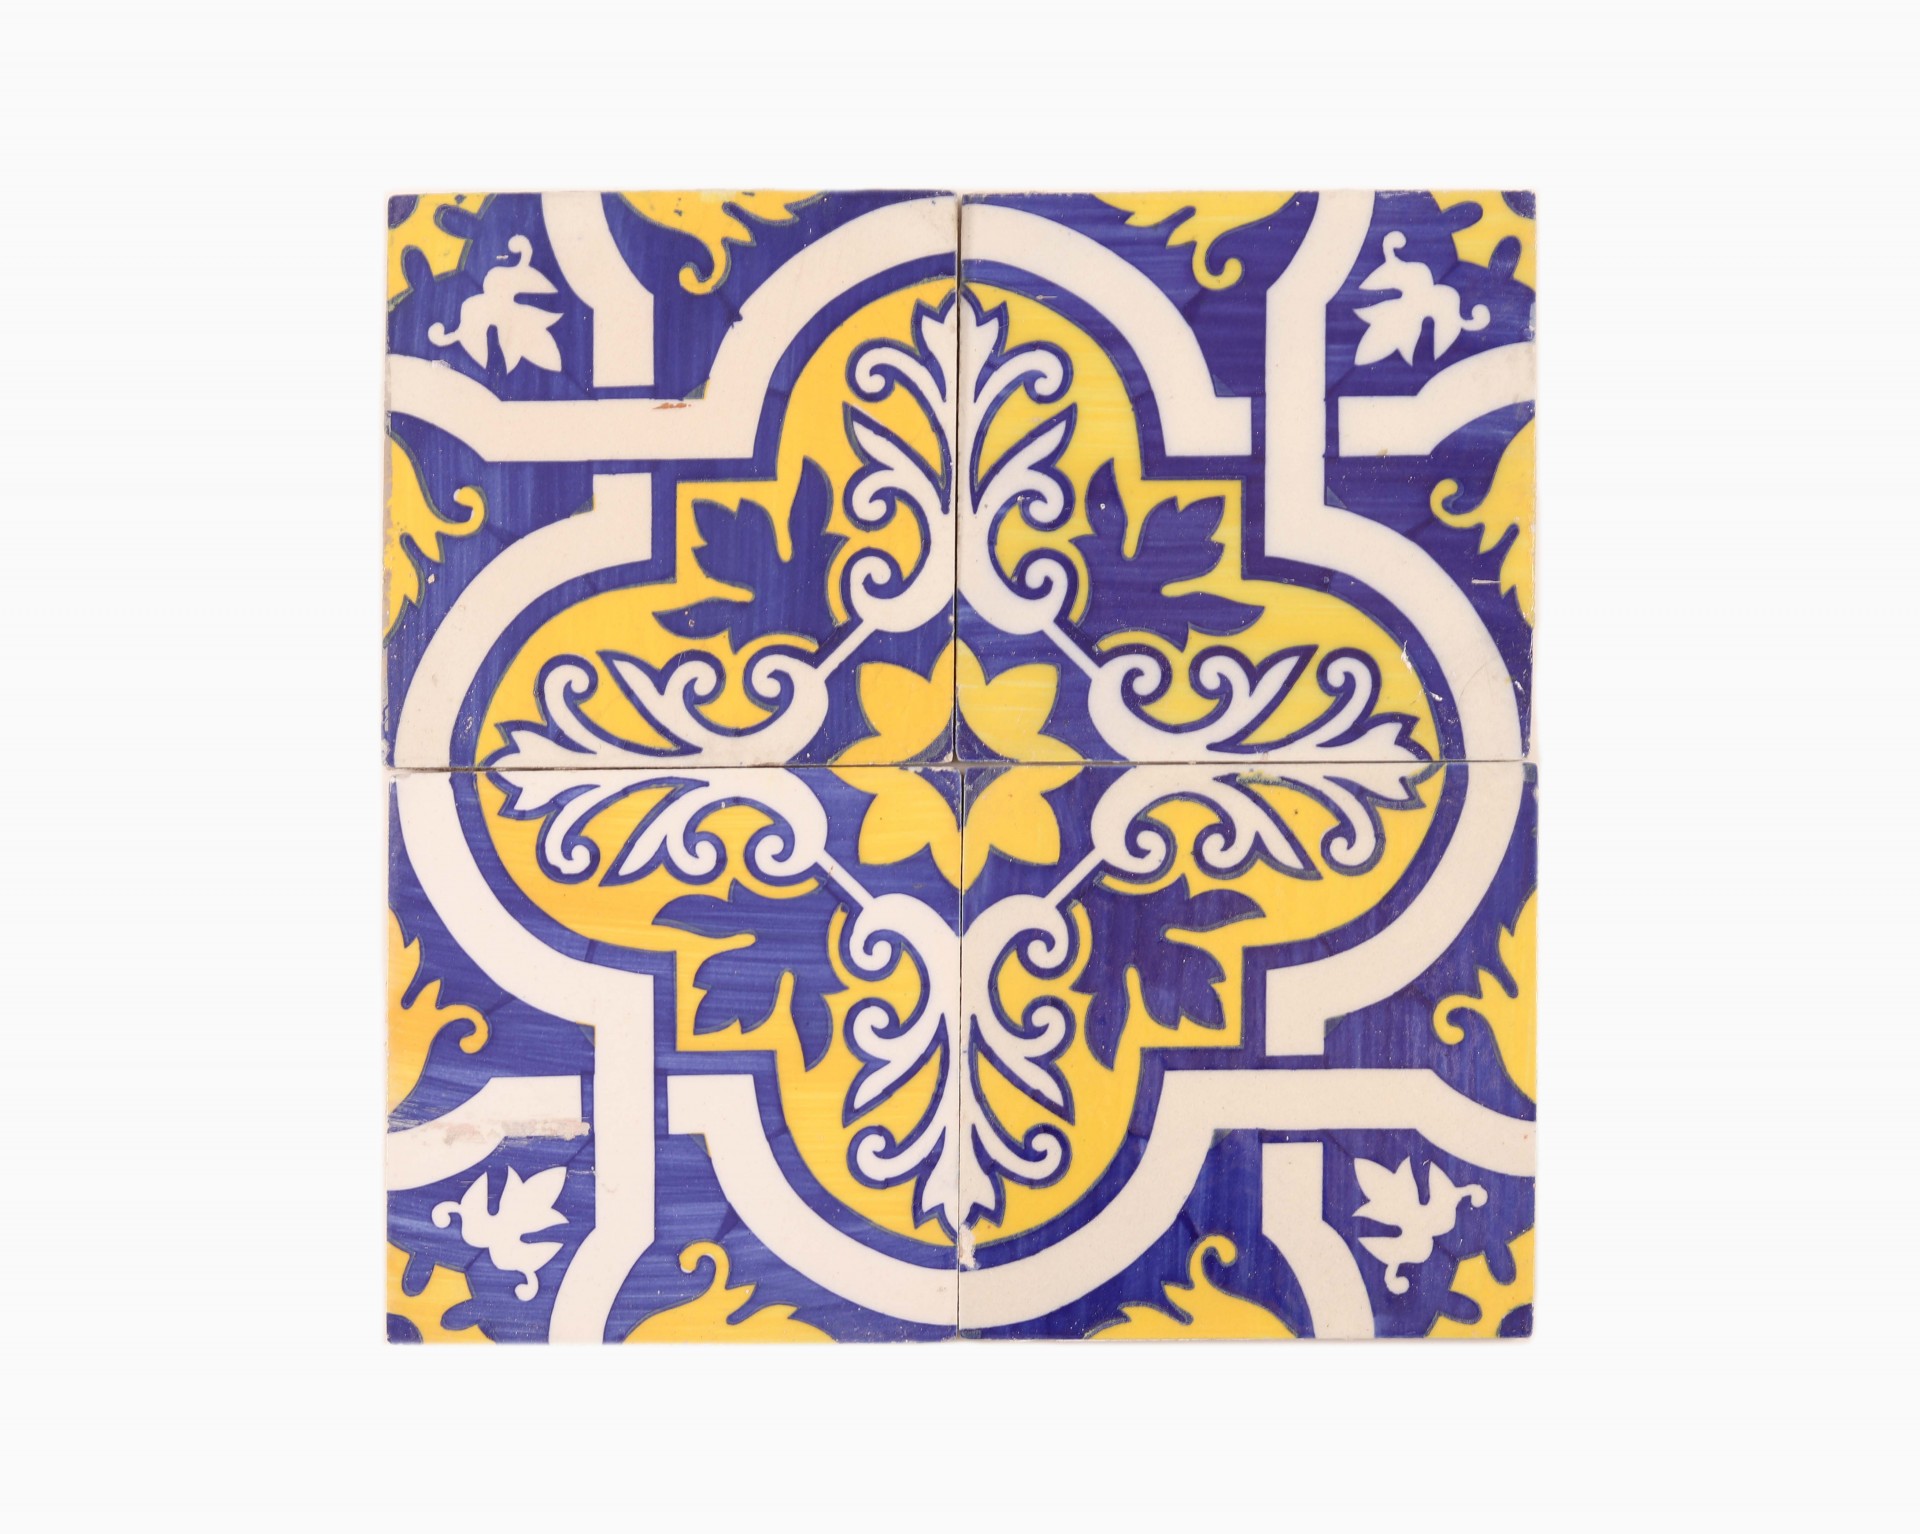 Quadra de azulejos portugueses 